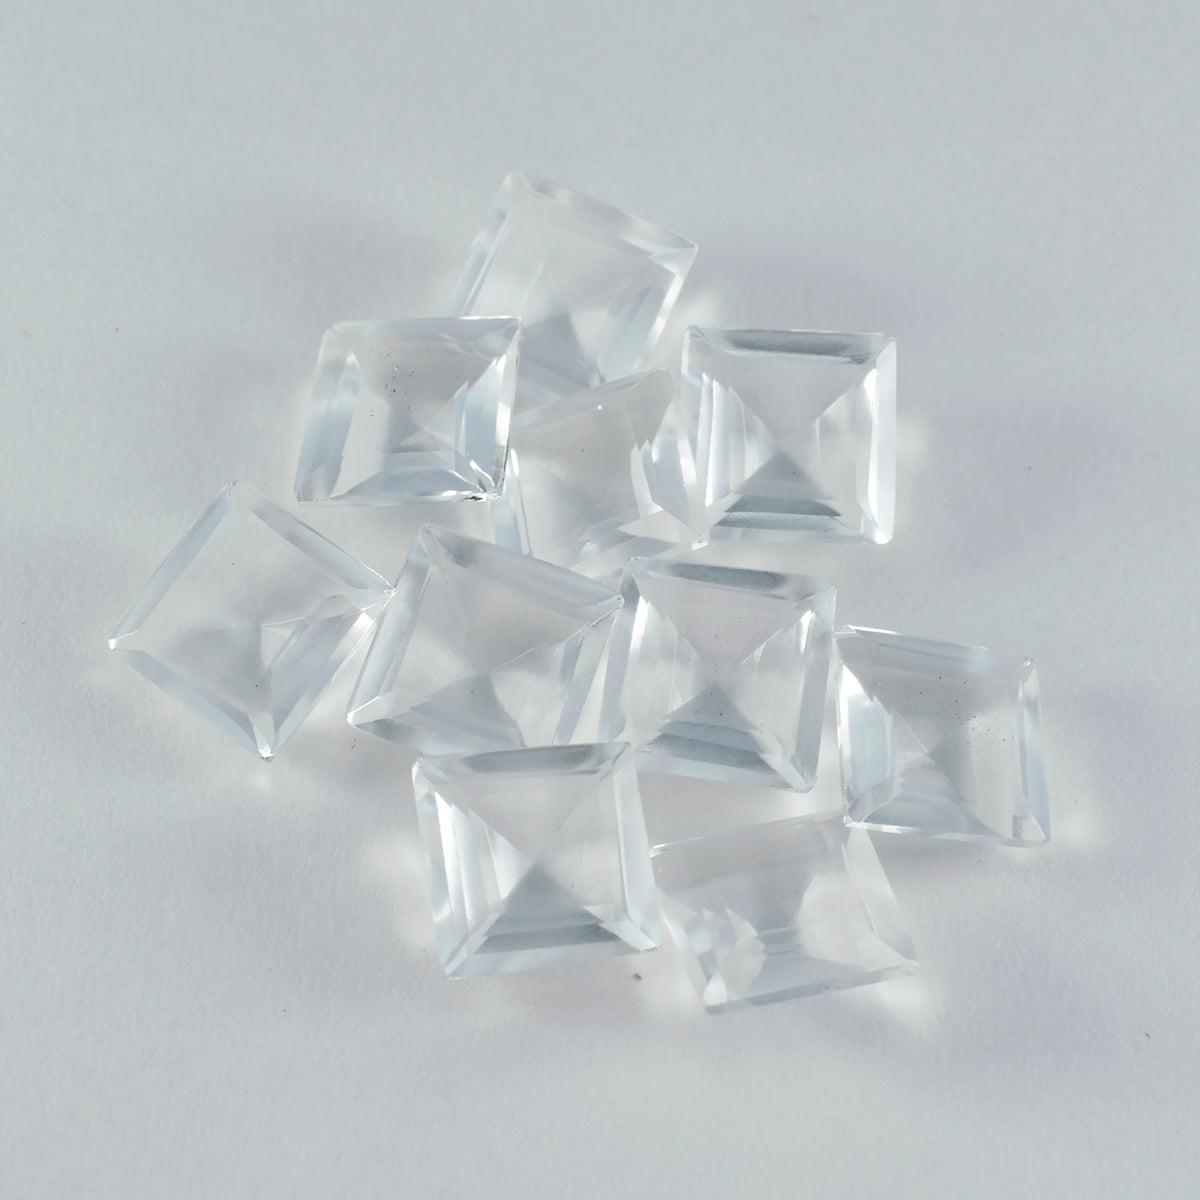 riyogems 1 st vit kristall kvarts facetterad 12x12 mm fyrkantig form härlig kvalitet lös pärla